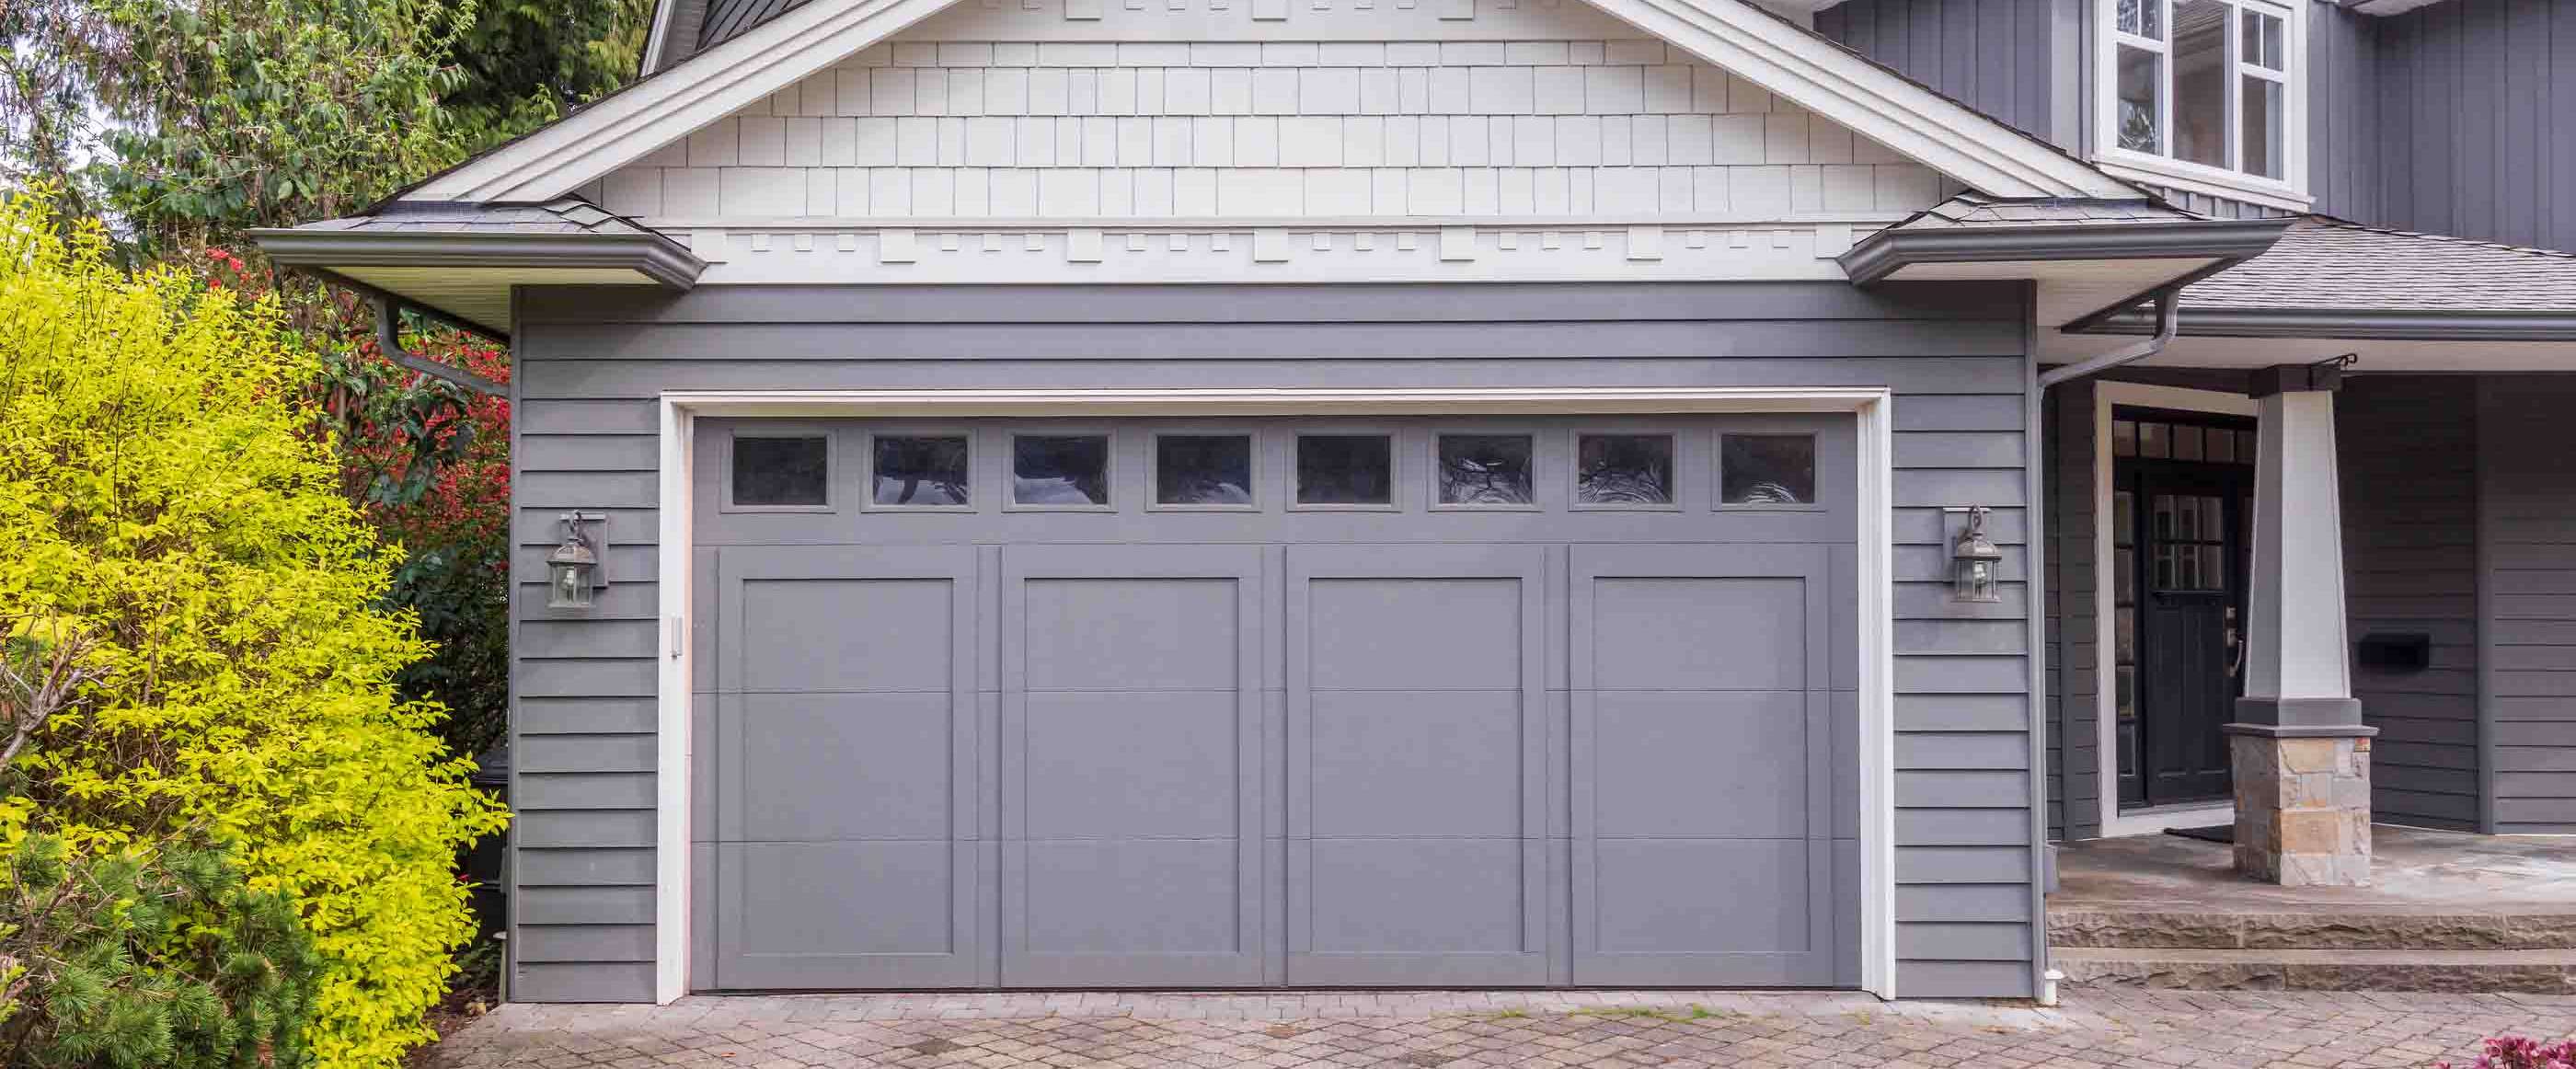 12 New Garage door company wichita ks for Remodeling